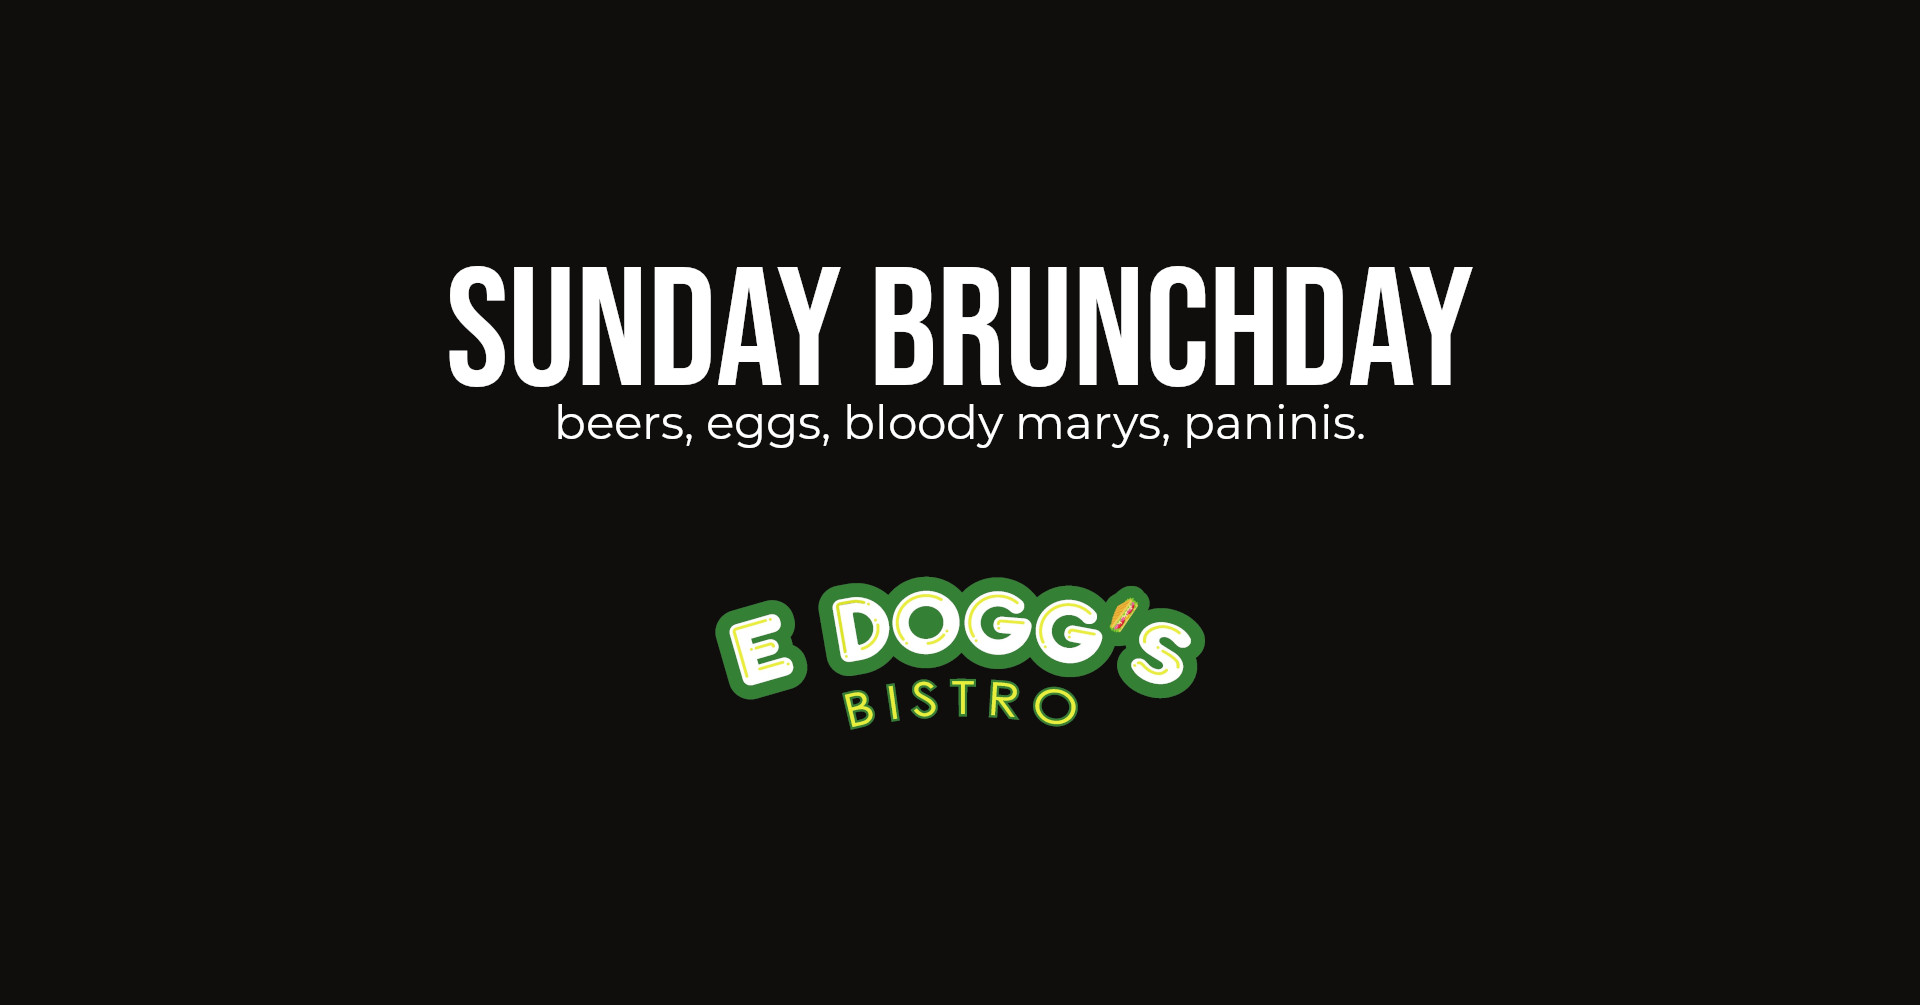 Sunday Brunchday w/ E Dogg's Bistro